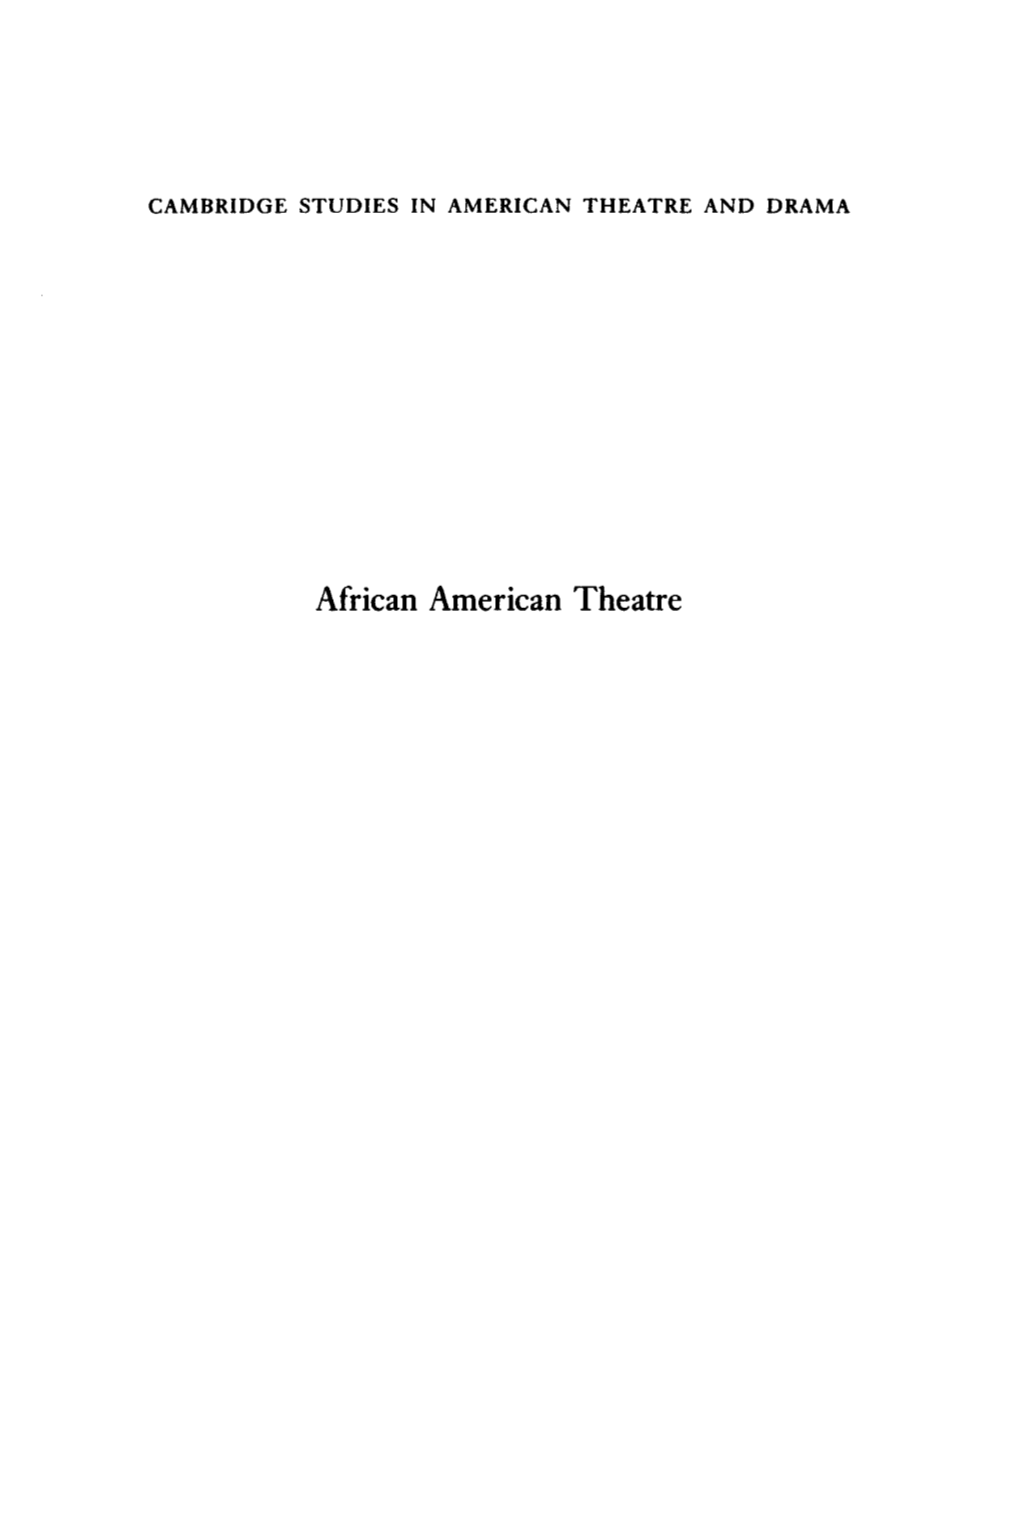 African American Theatre CAMBRIDGE STUDIES in AMERICAN THEATRE and DRAMA